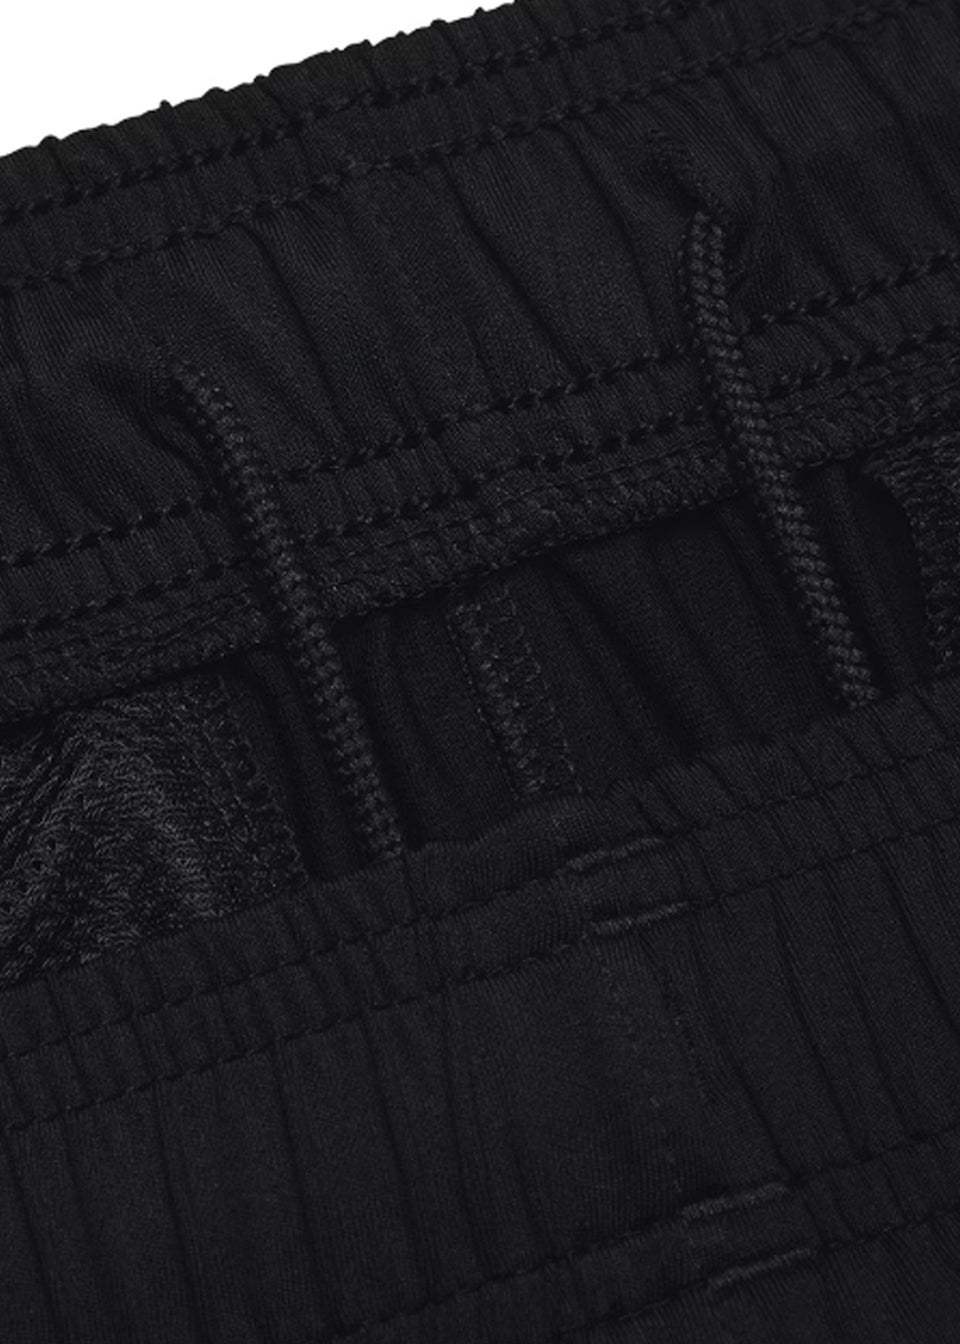 Under Armour Black Logo Vent Shorts